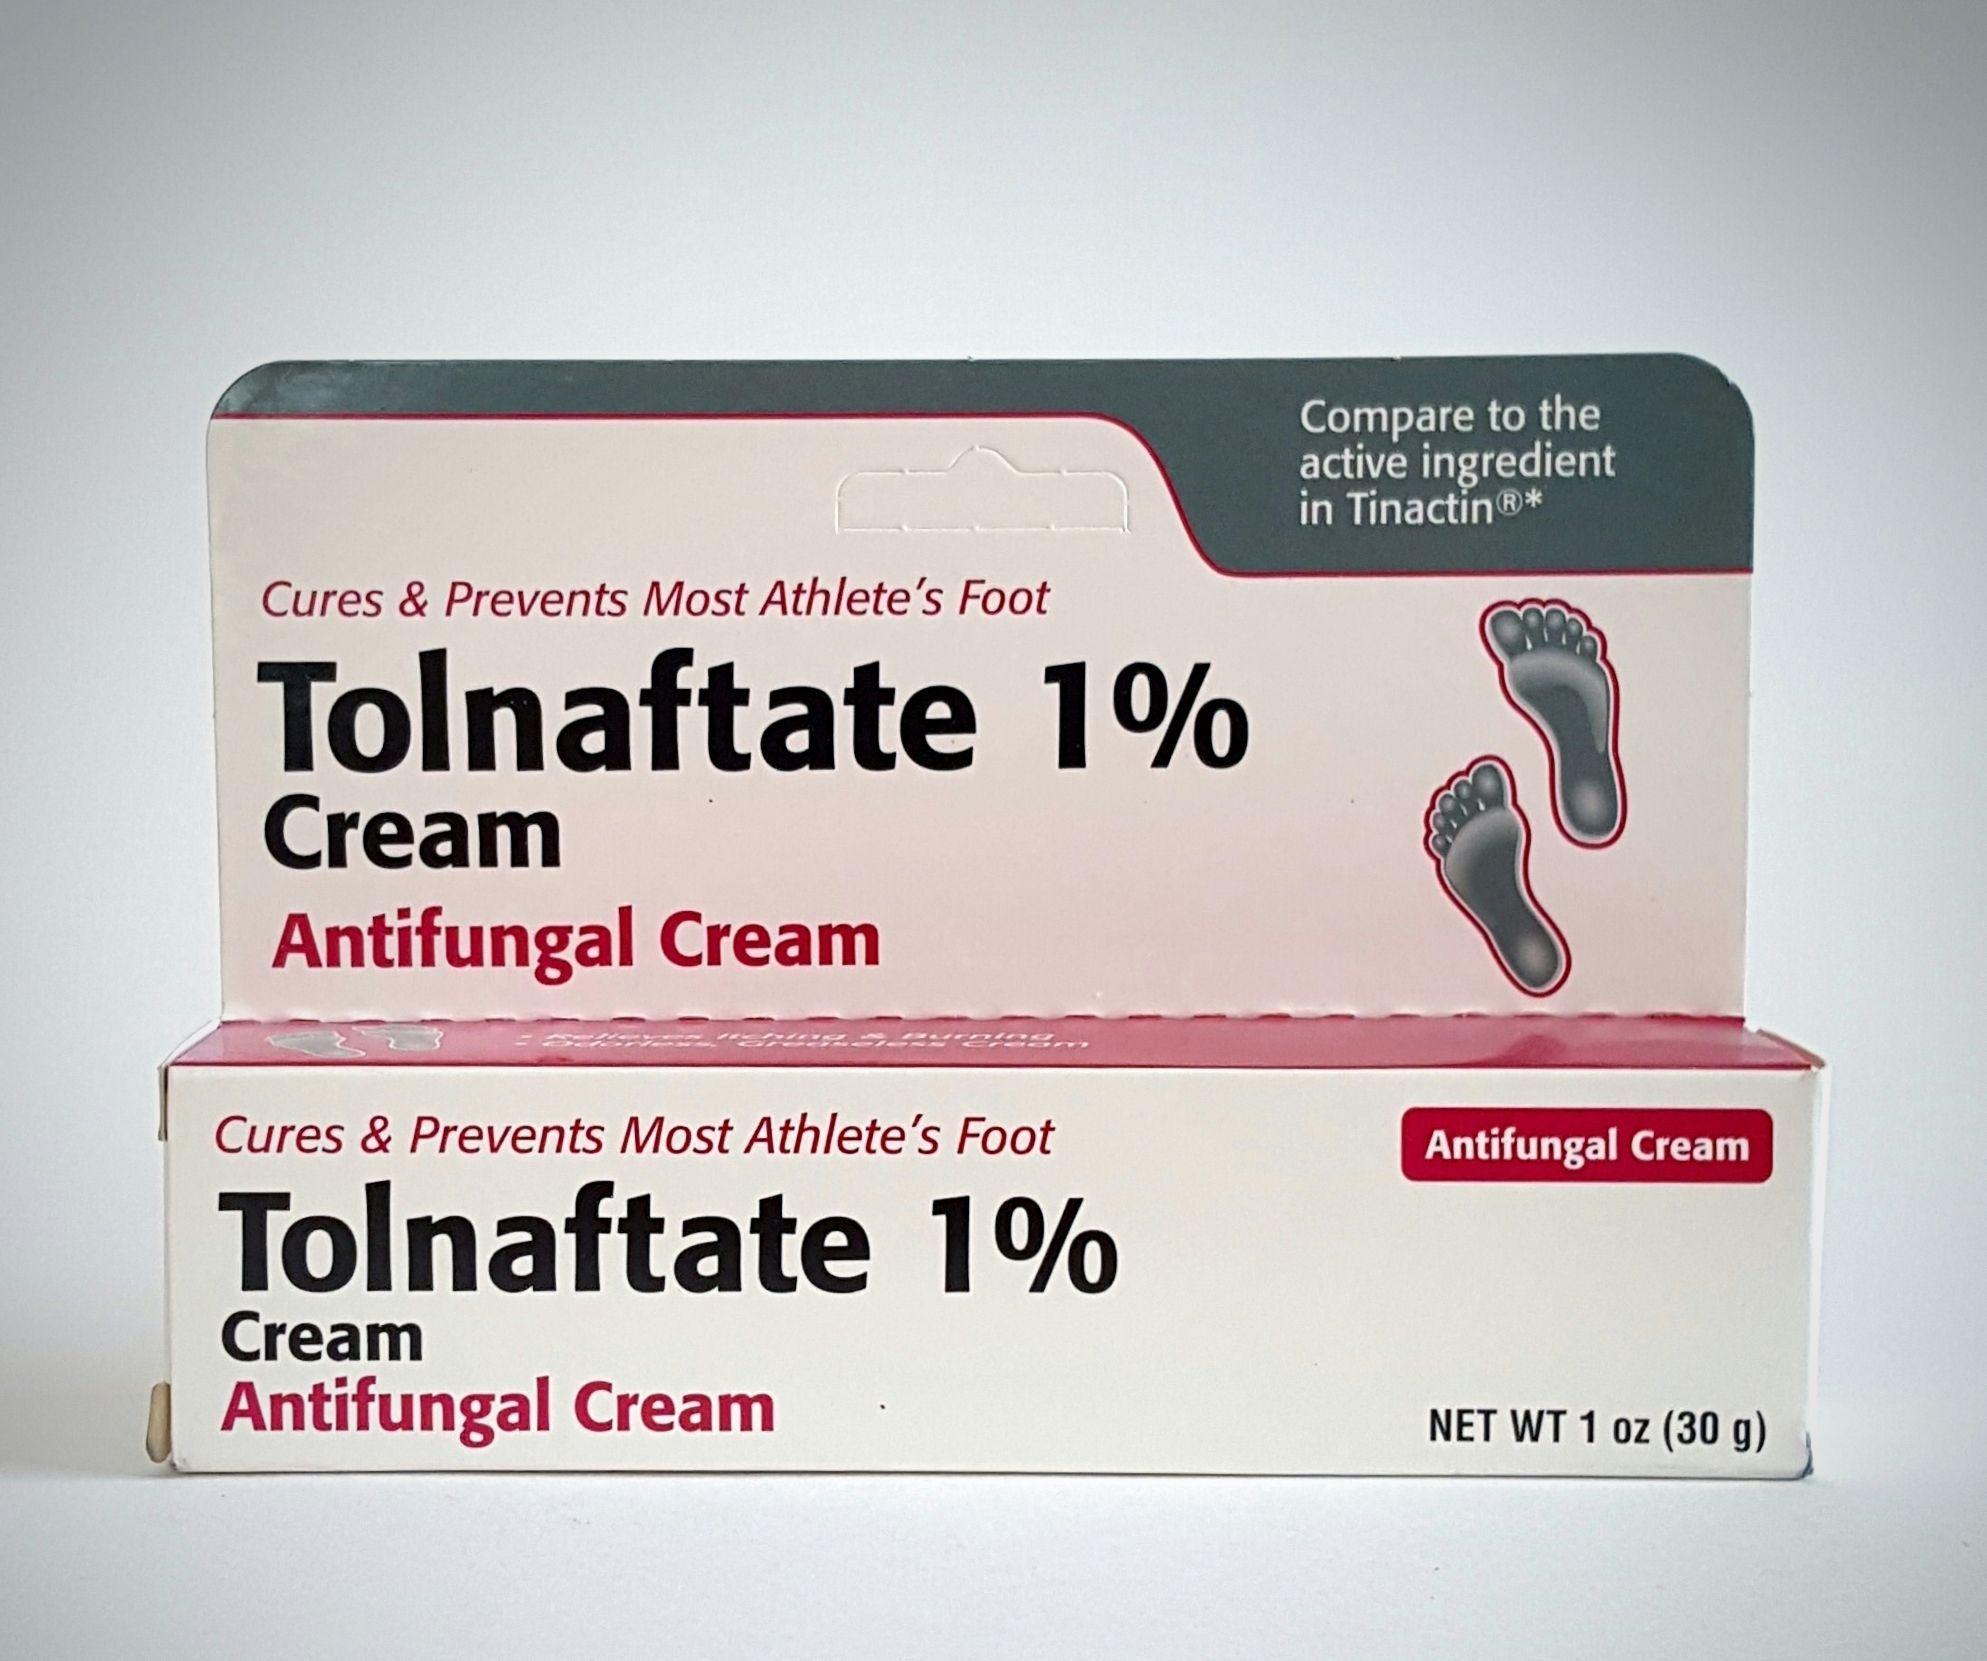 TaroPharma Logo - Details about TOLNAFTATE 1% Antifungal Cream (compare to Tinactin) by Taro Pharma or 30gm